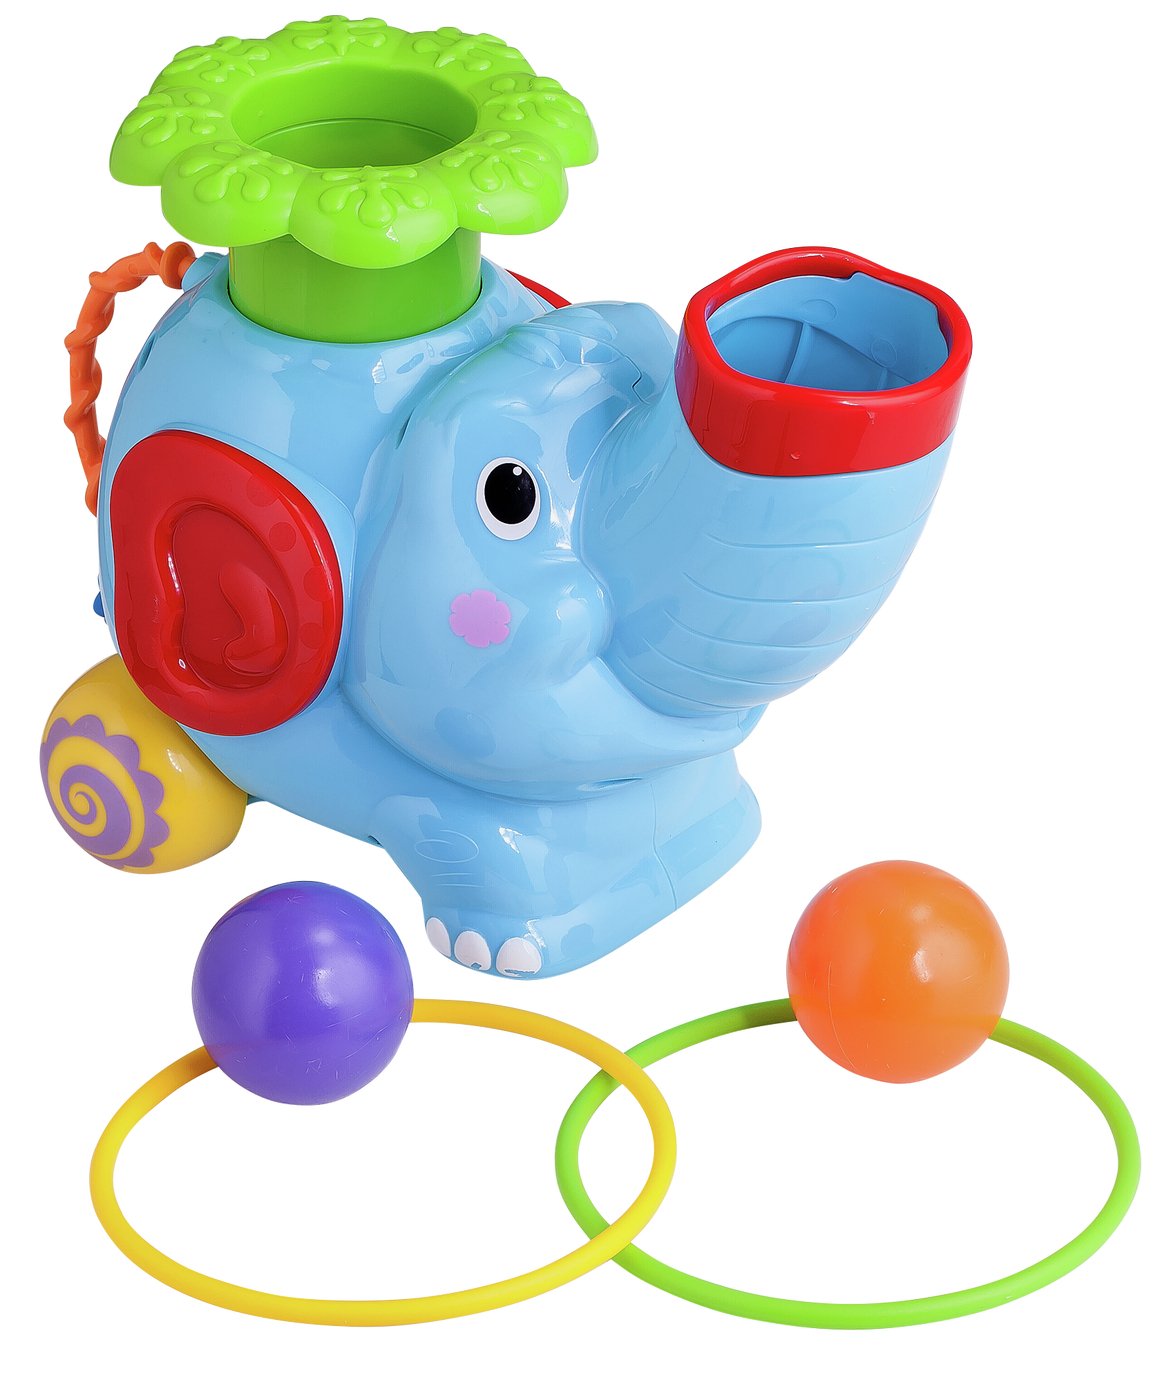 elephant soft toy argos